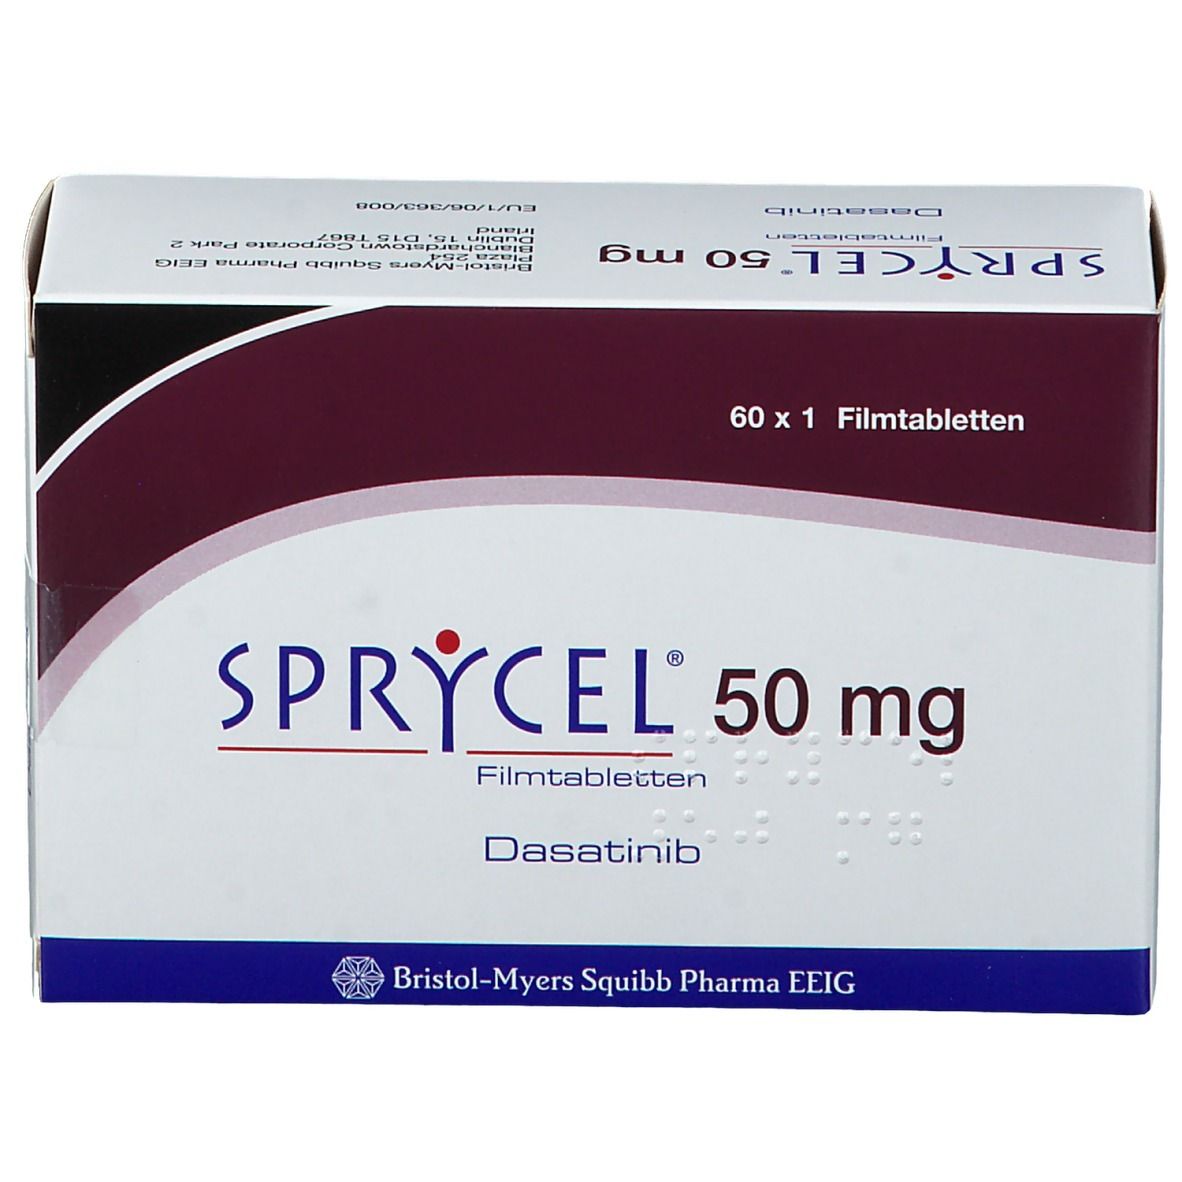 SPRYCEL® 50 mg